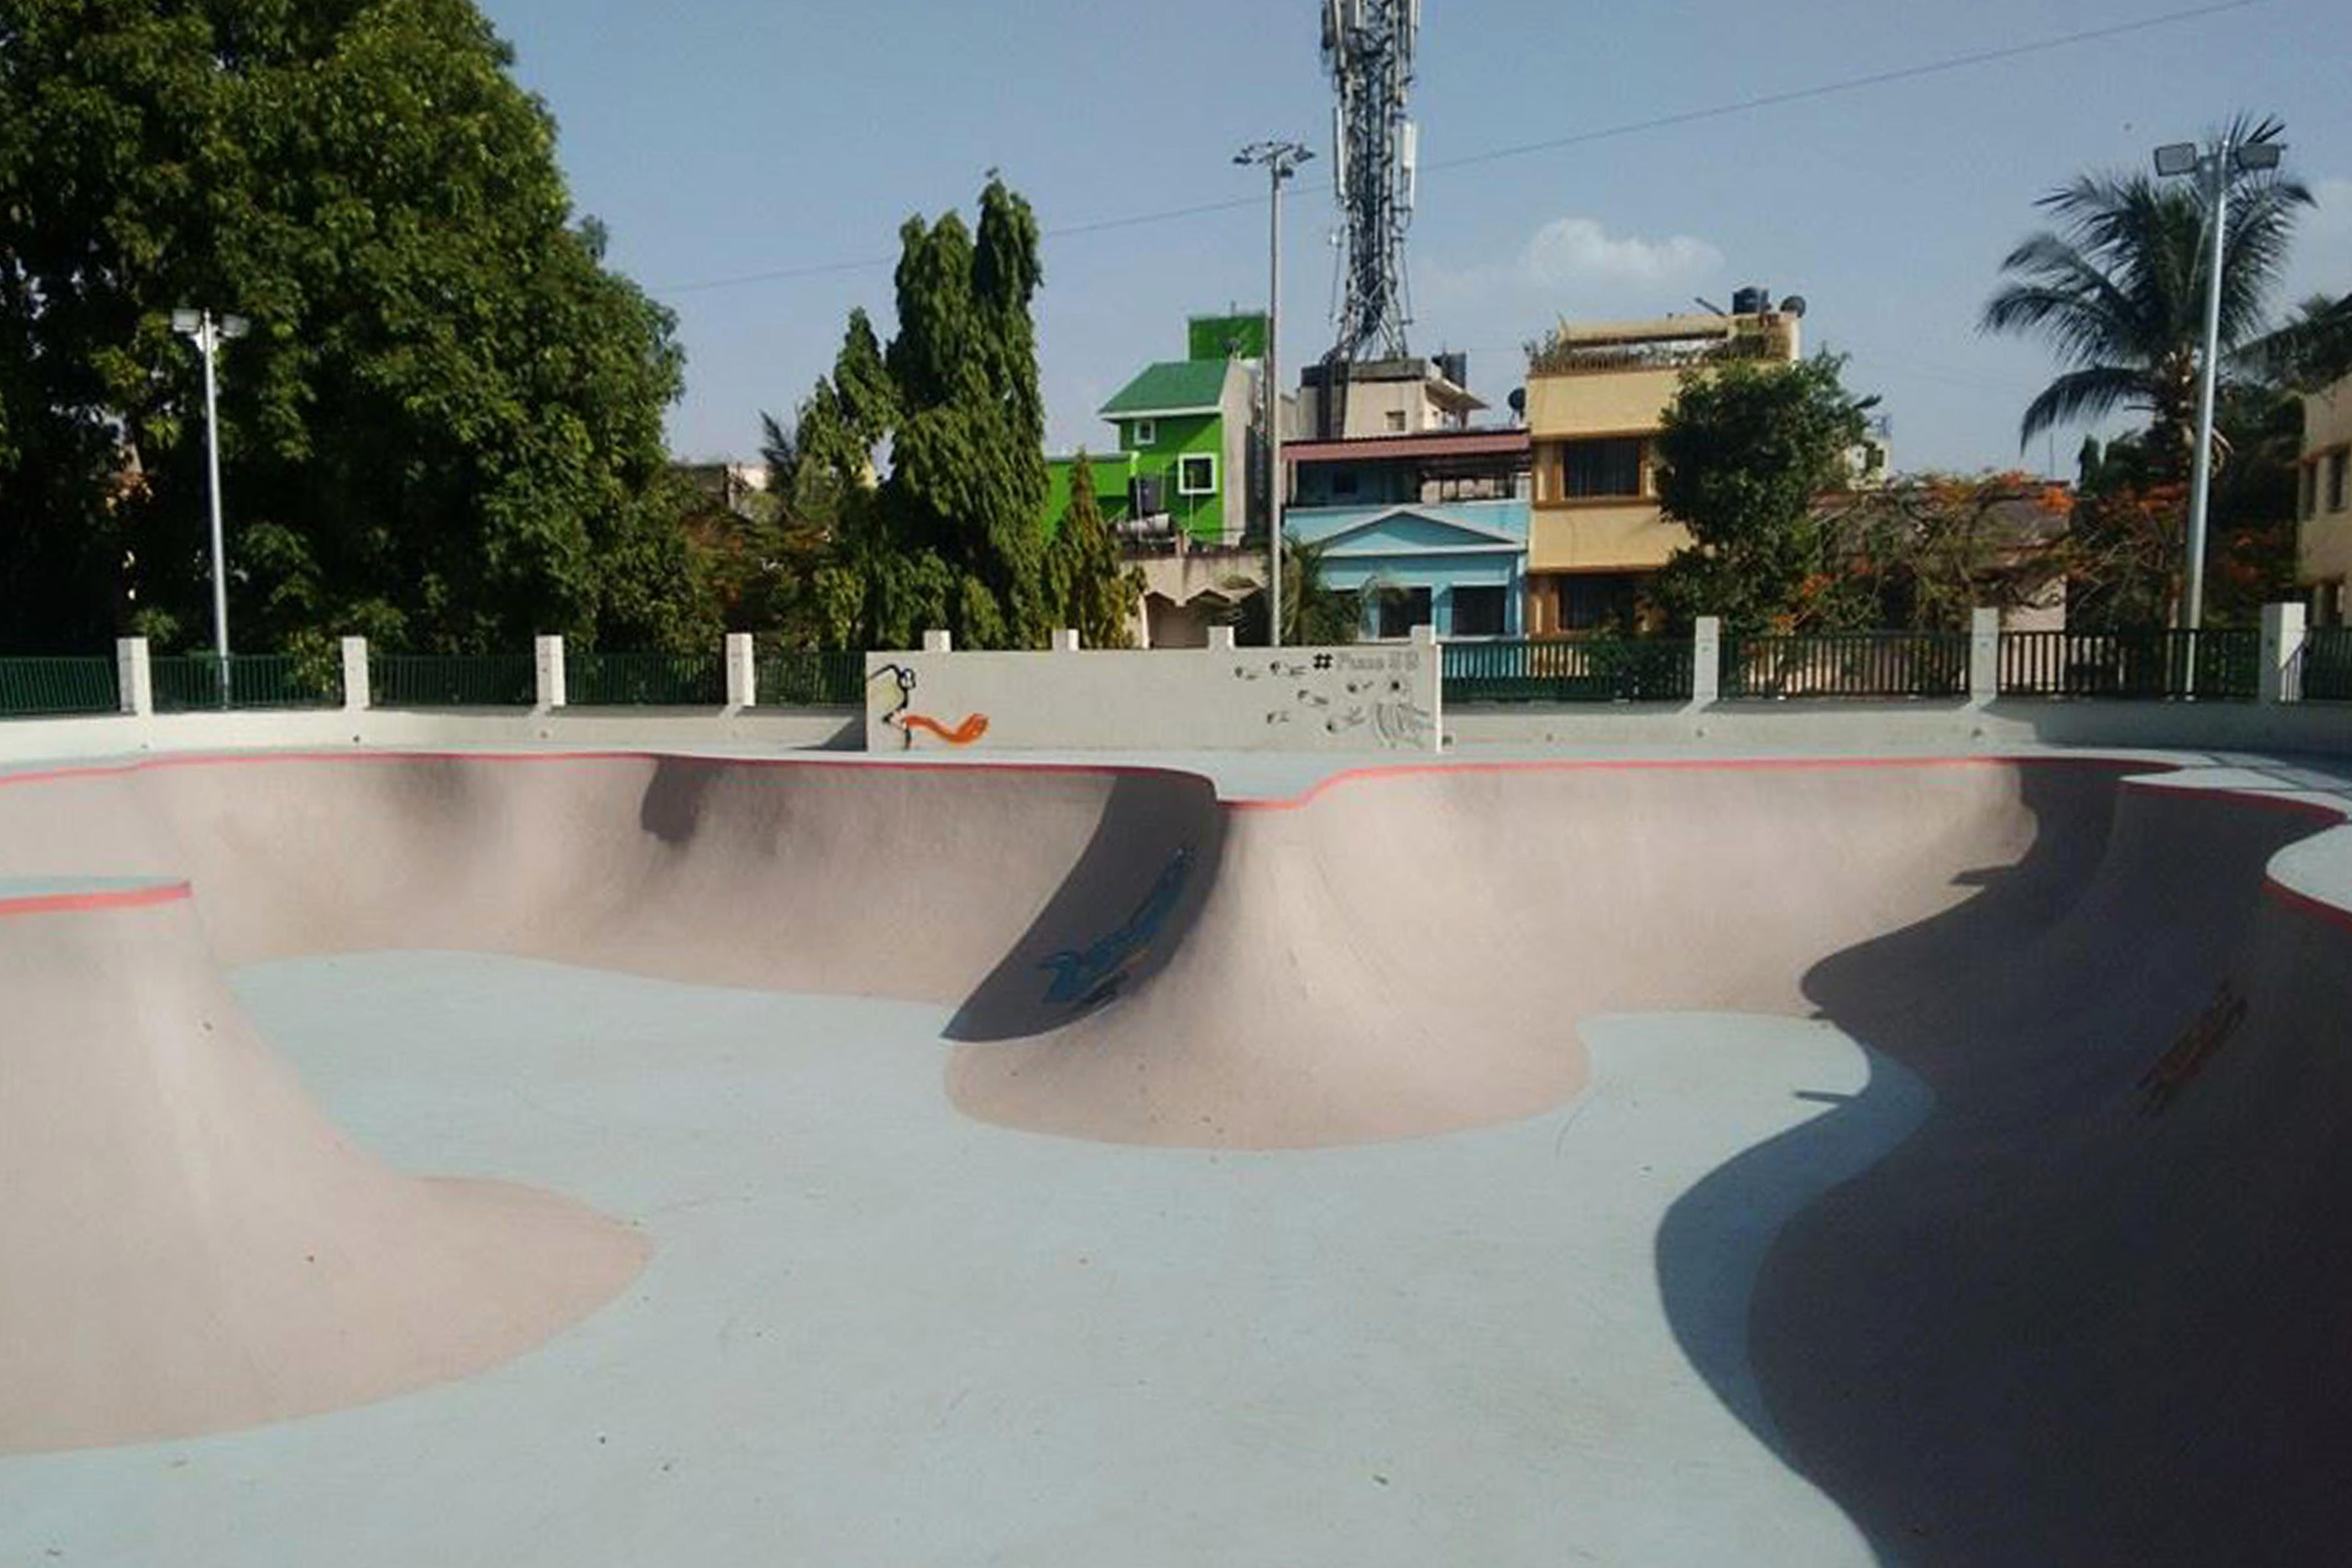 Skatepark Dreams: Clearing Land for Skate Parks 2